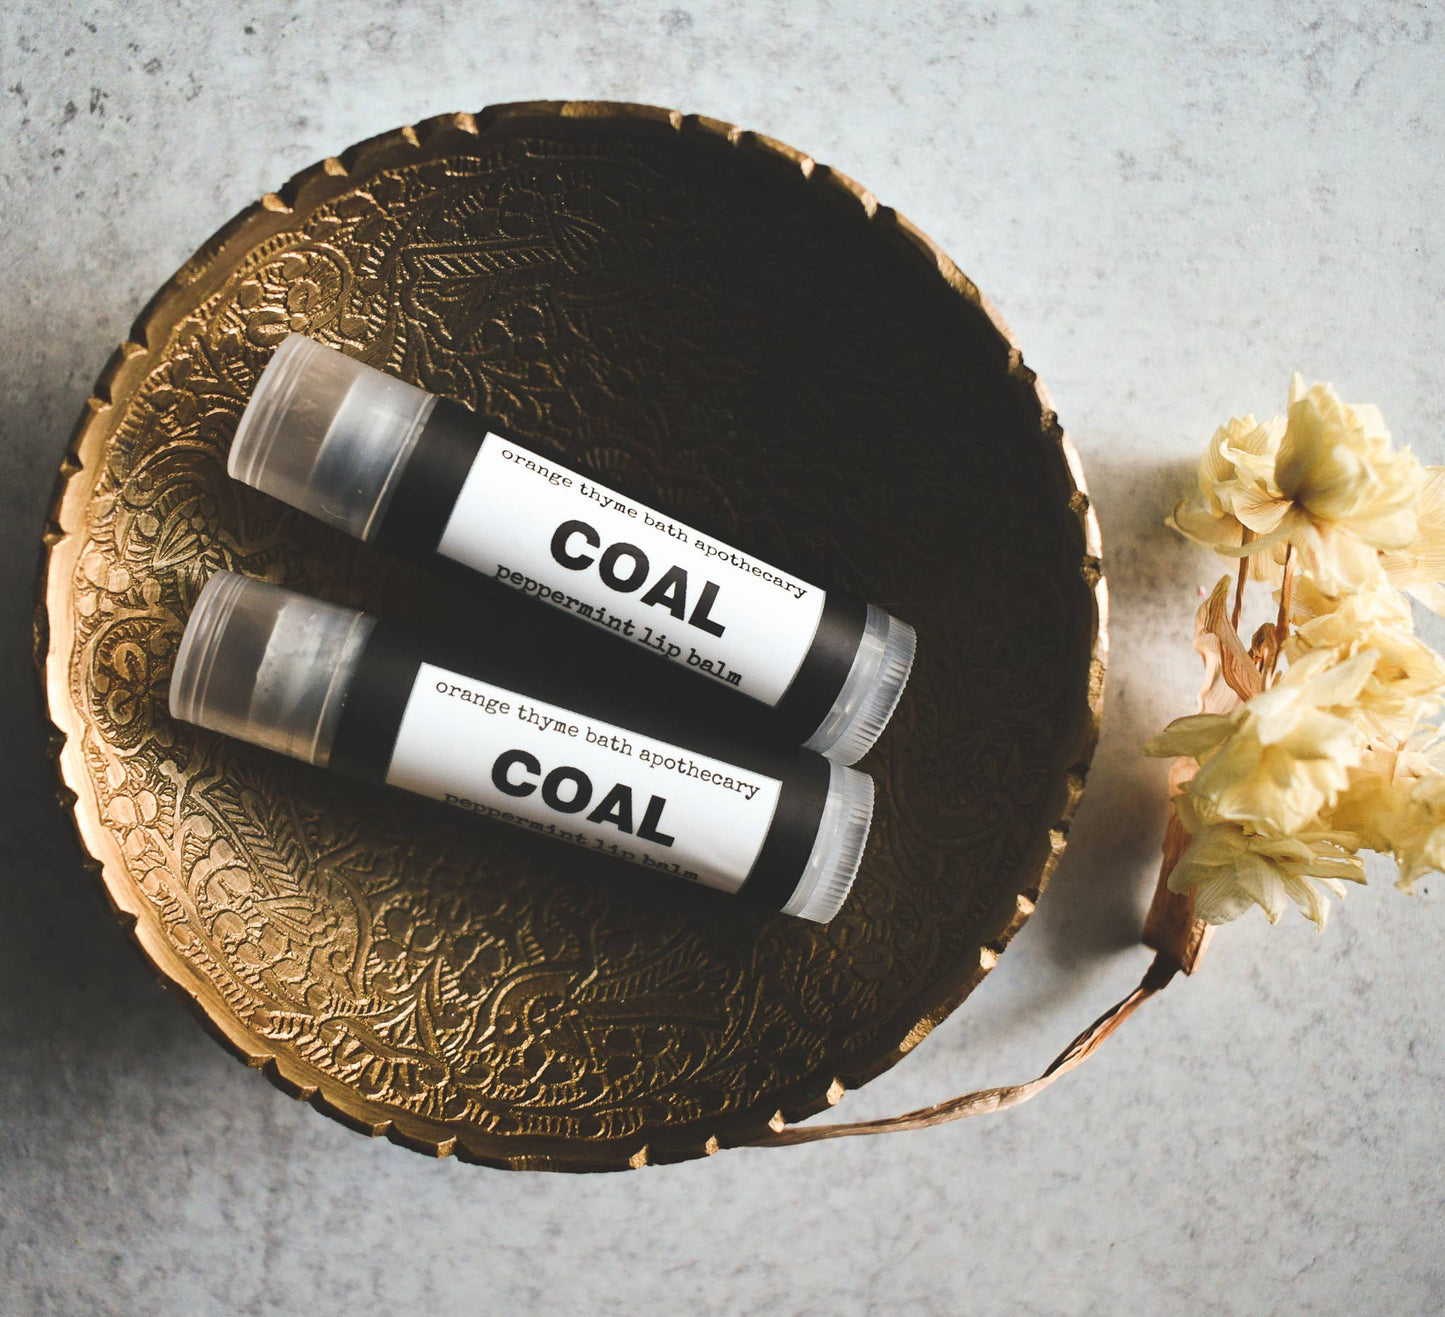 "Coal" Peppermint Lip Balm